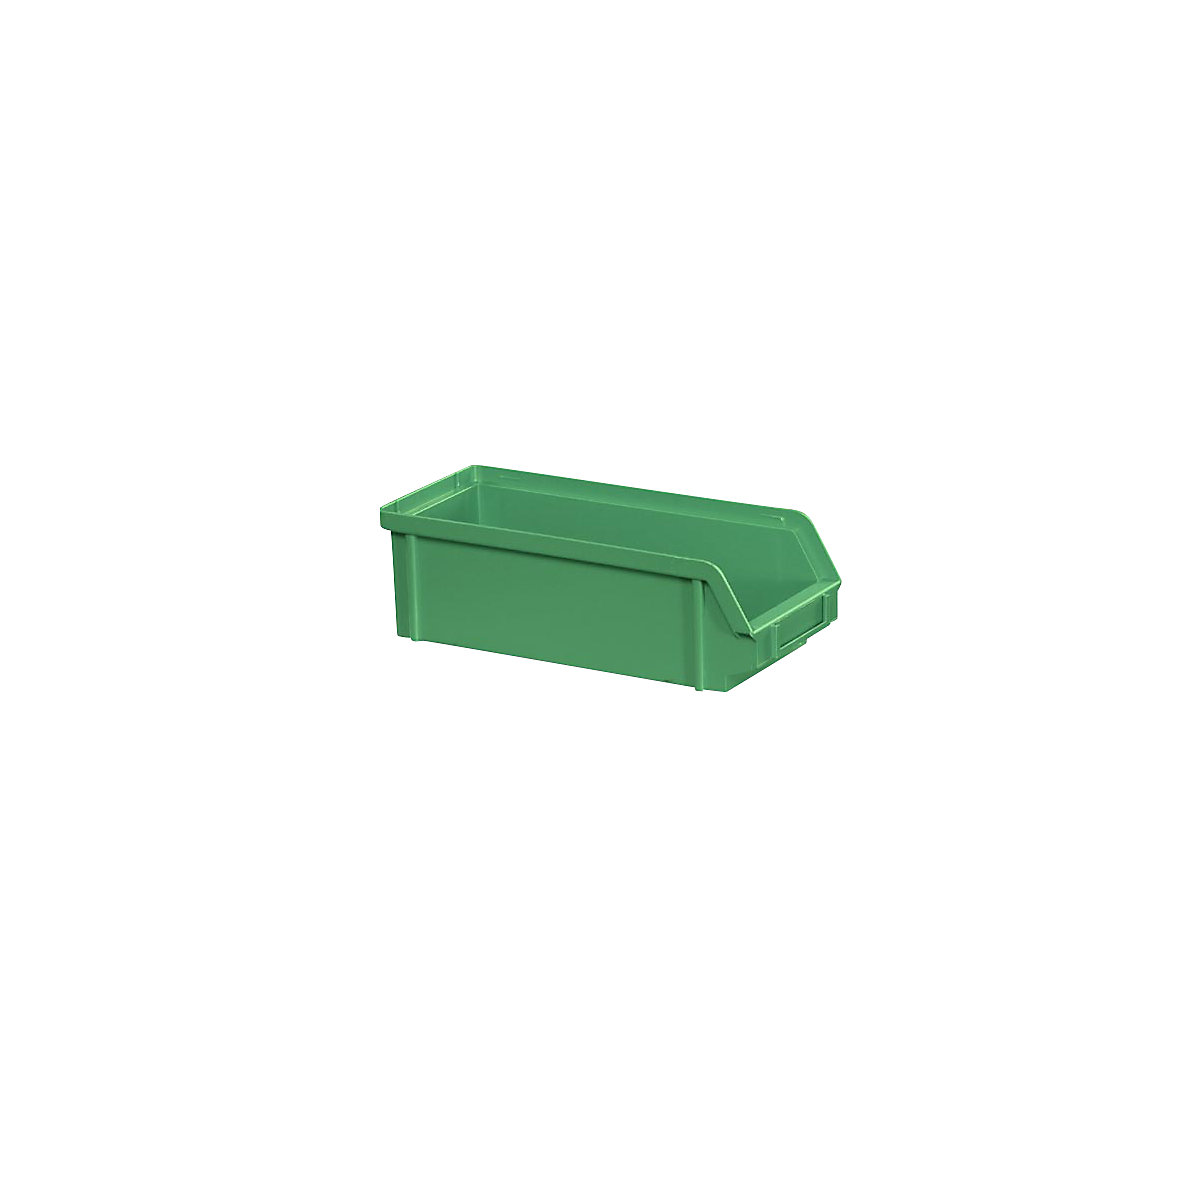 Bac à bec en polystyrène, longueur 230 mm, l x h 102 x 75 mm, lot de 24, vert-7